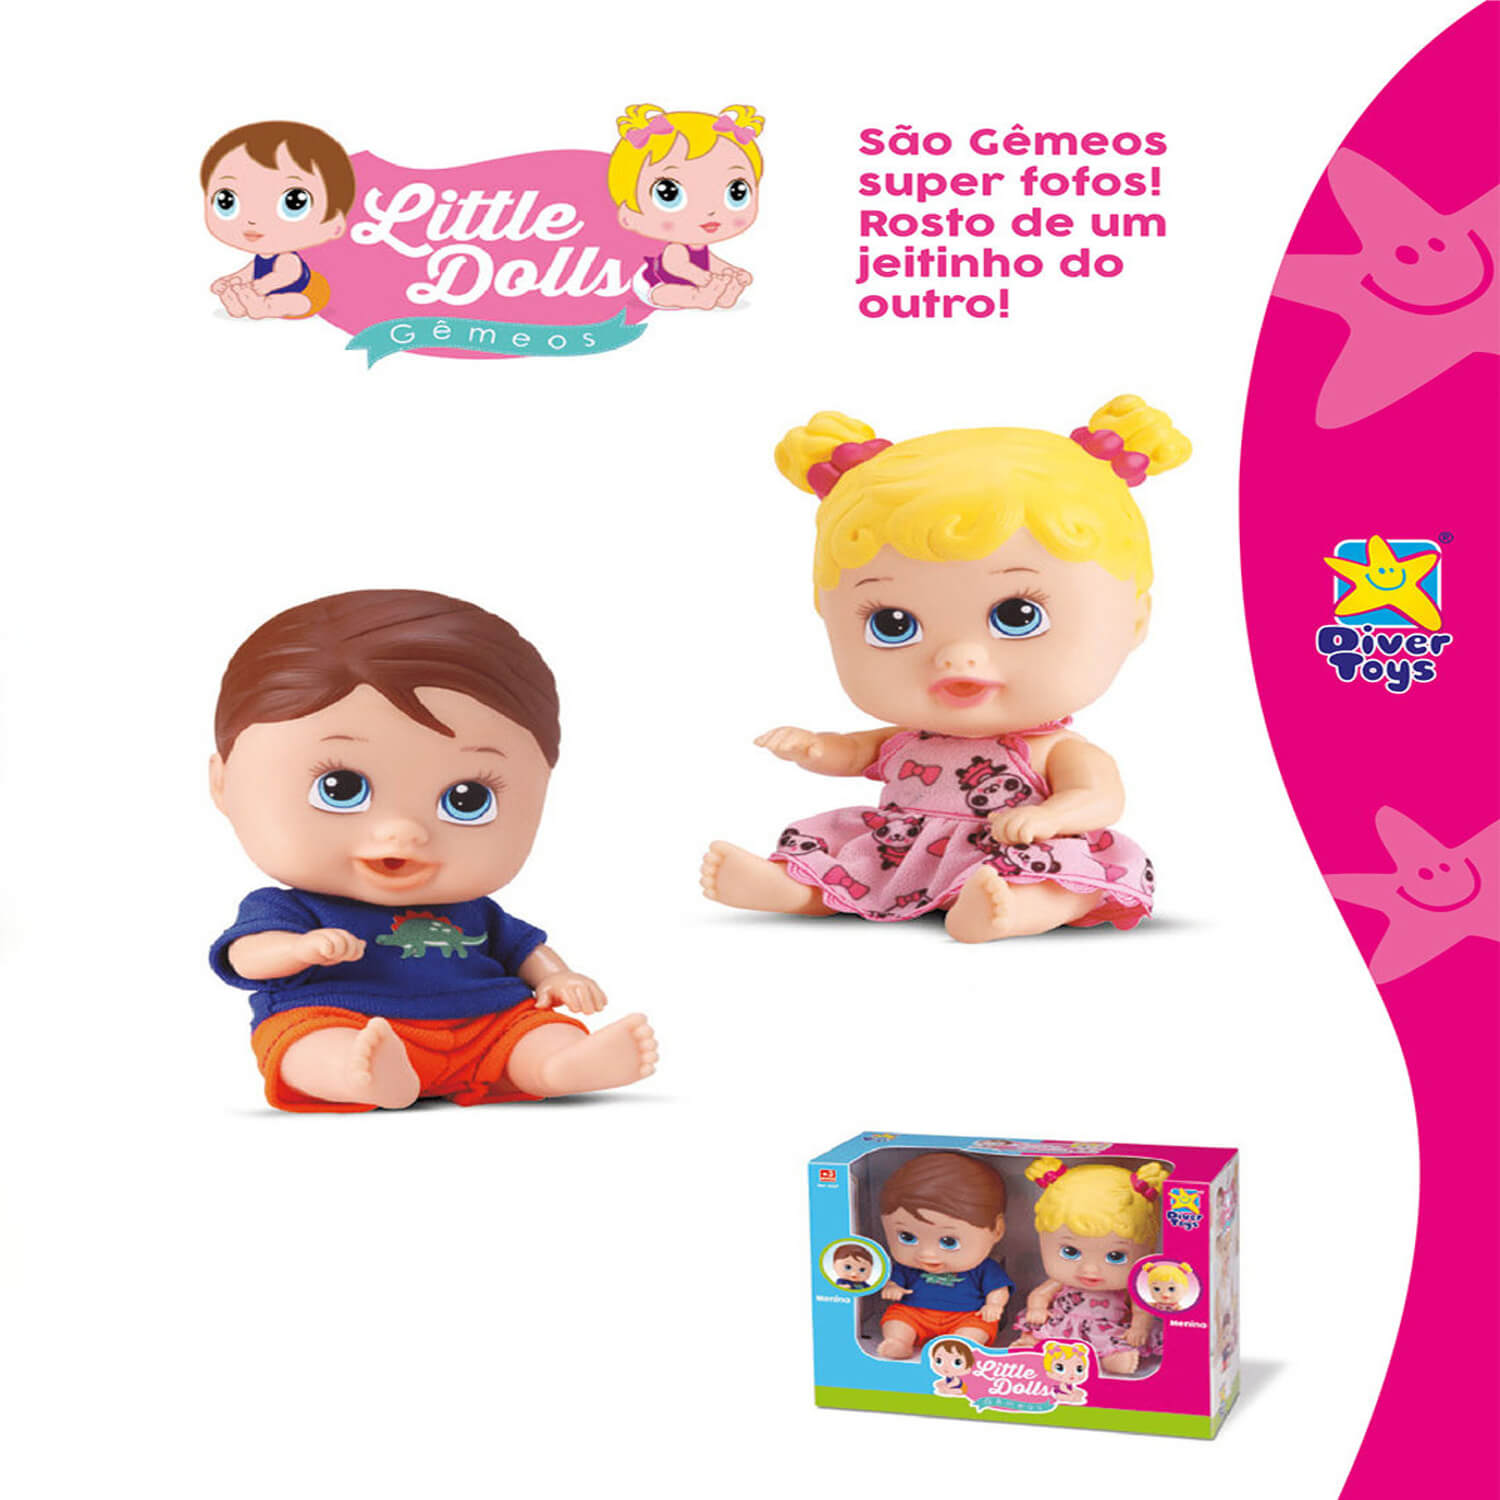 Lojas-TEM-Bonecos-Little-Dolls-Gêmeos-Menino-Menina-Diver-Toys